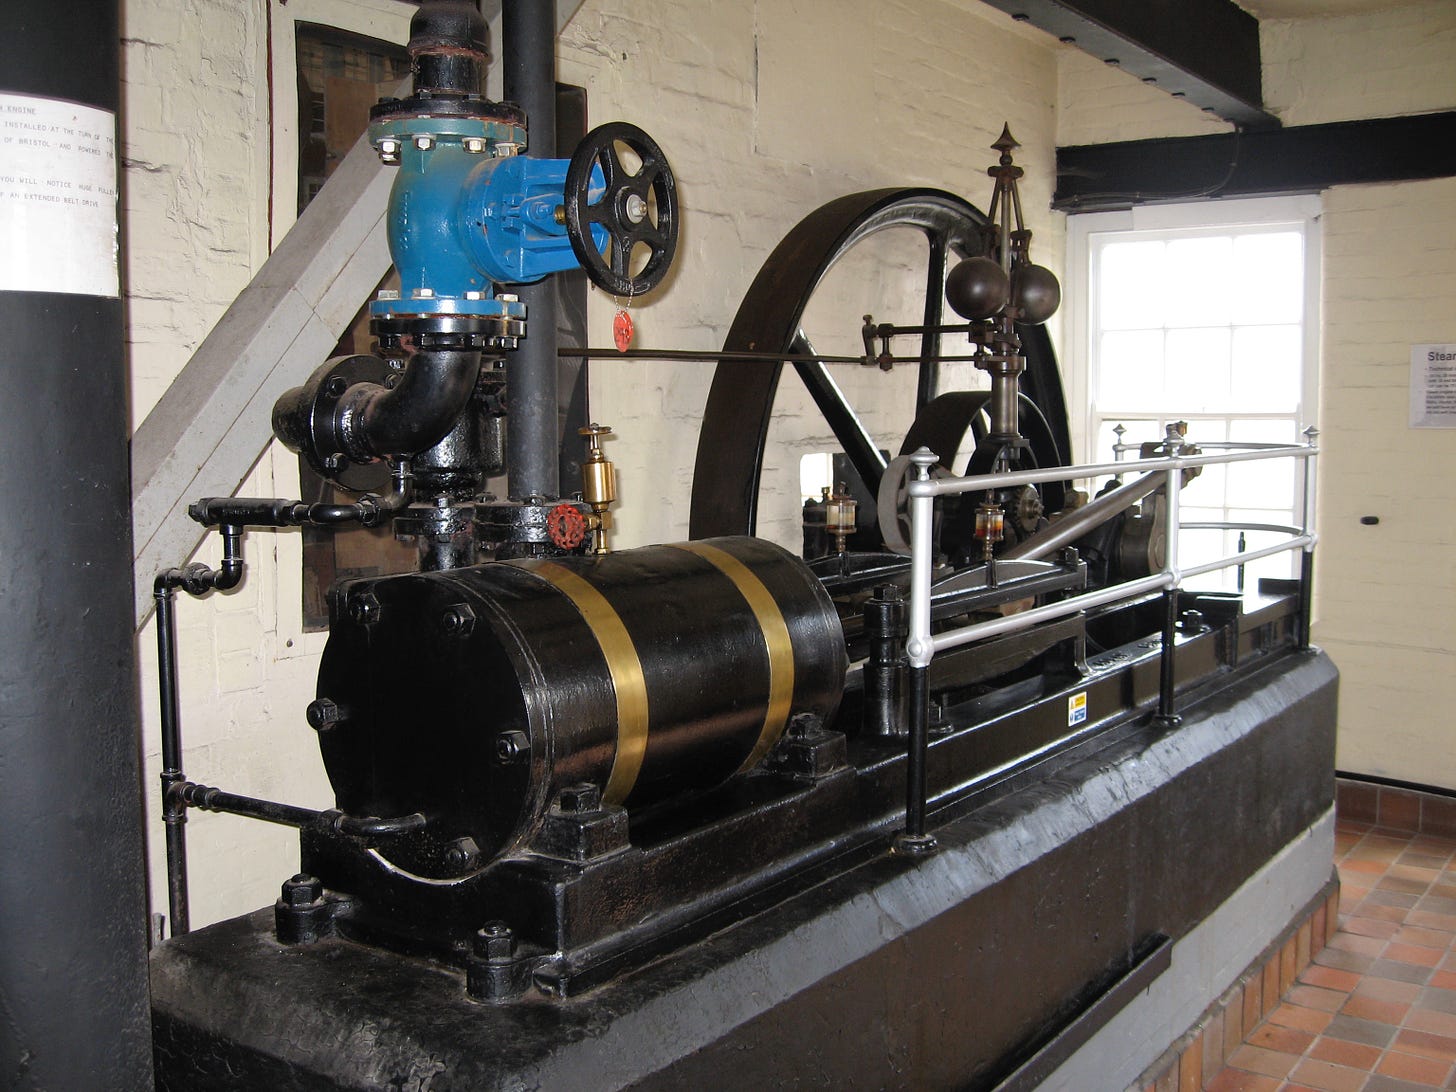 Stationary steam engine, Wadworth Brewery